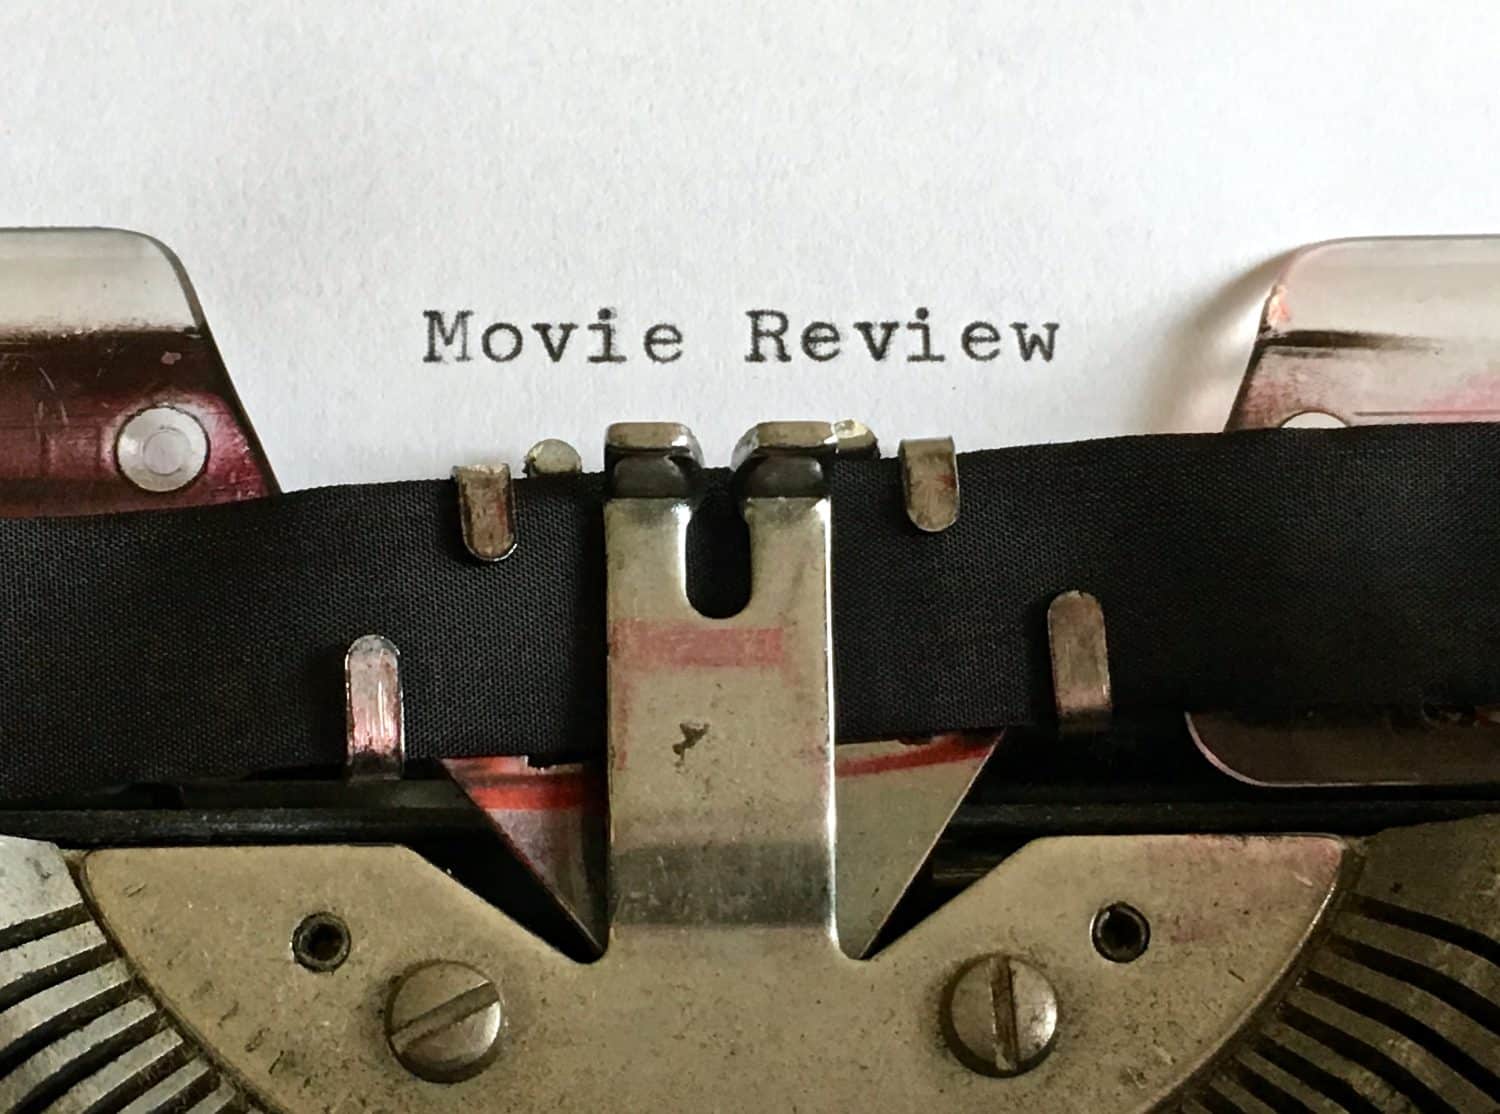 Movie Review, heading title typewritten on white paper in black ink on vintage manual typewriter machine